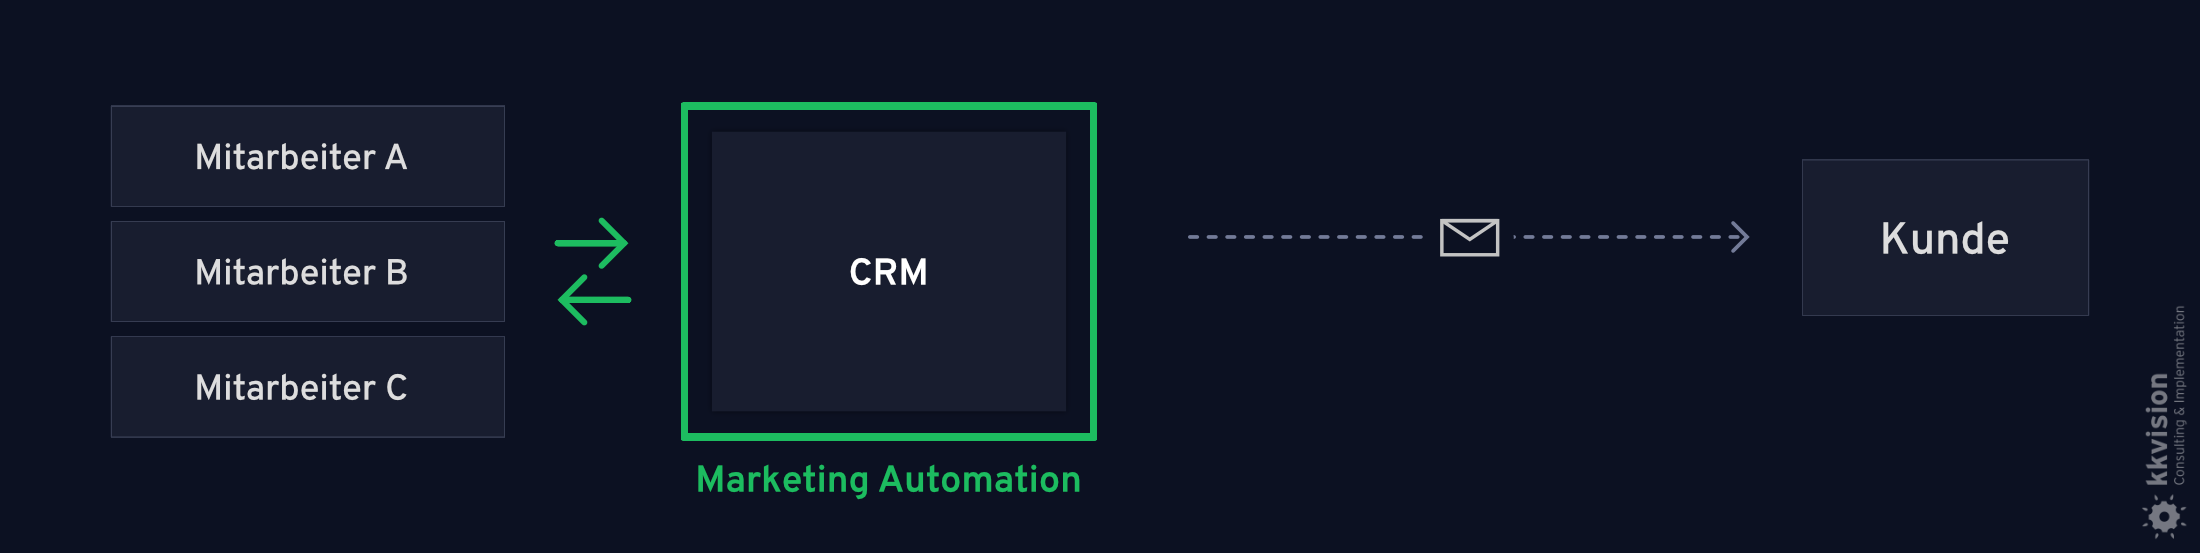 CRM & Marketing Automation_Kundenbeziehung verbessern